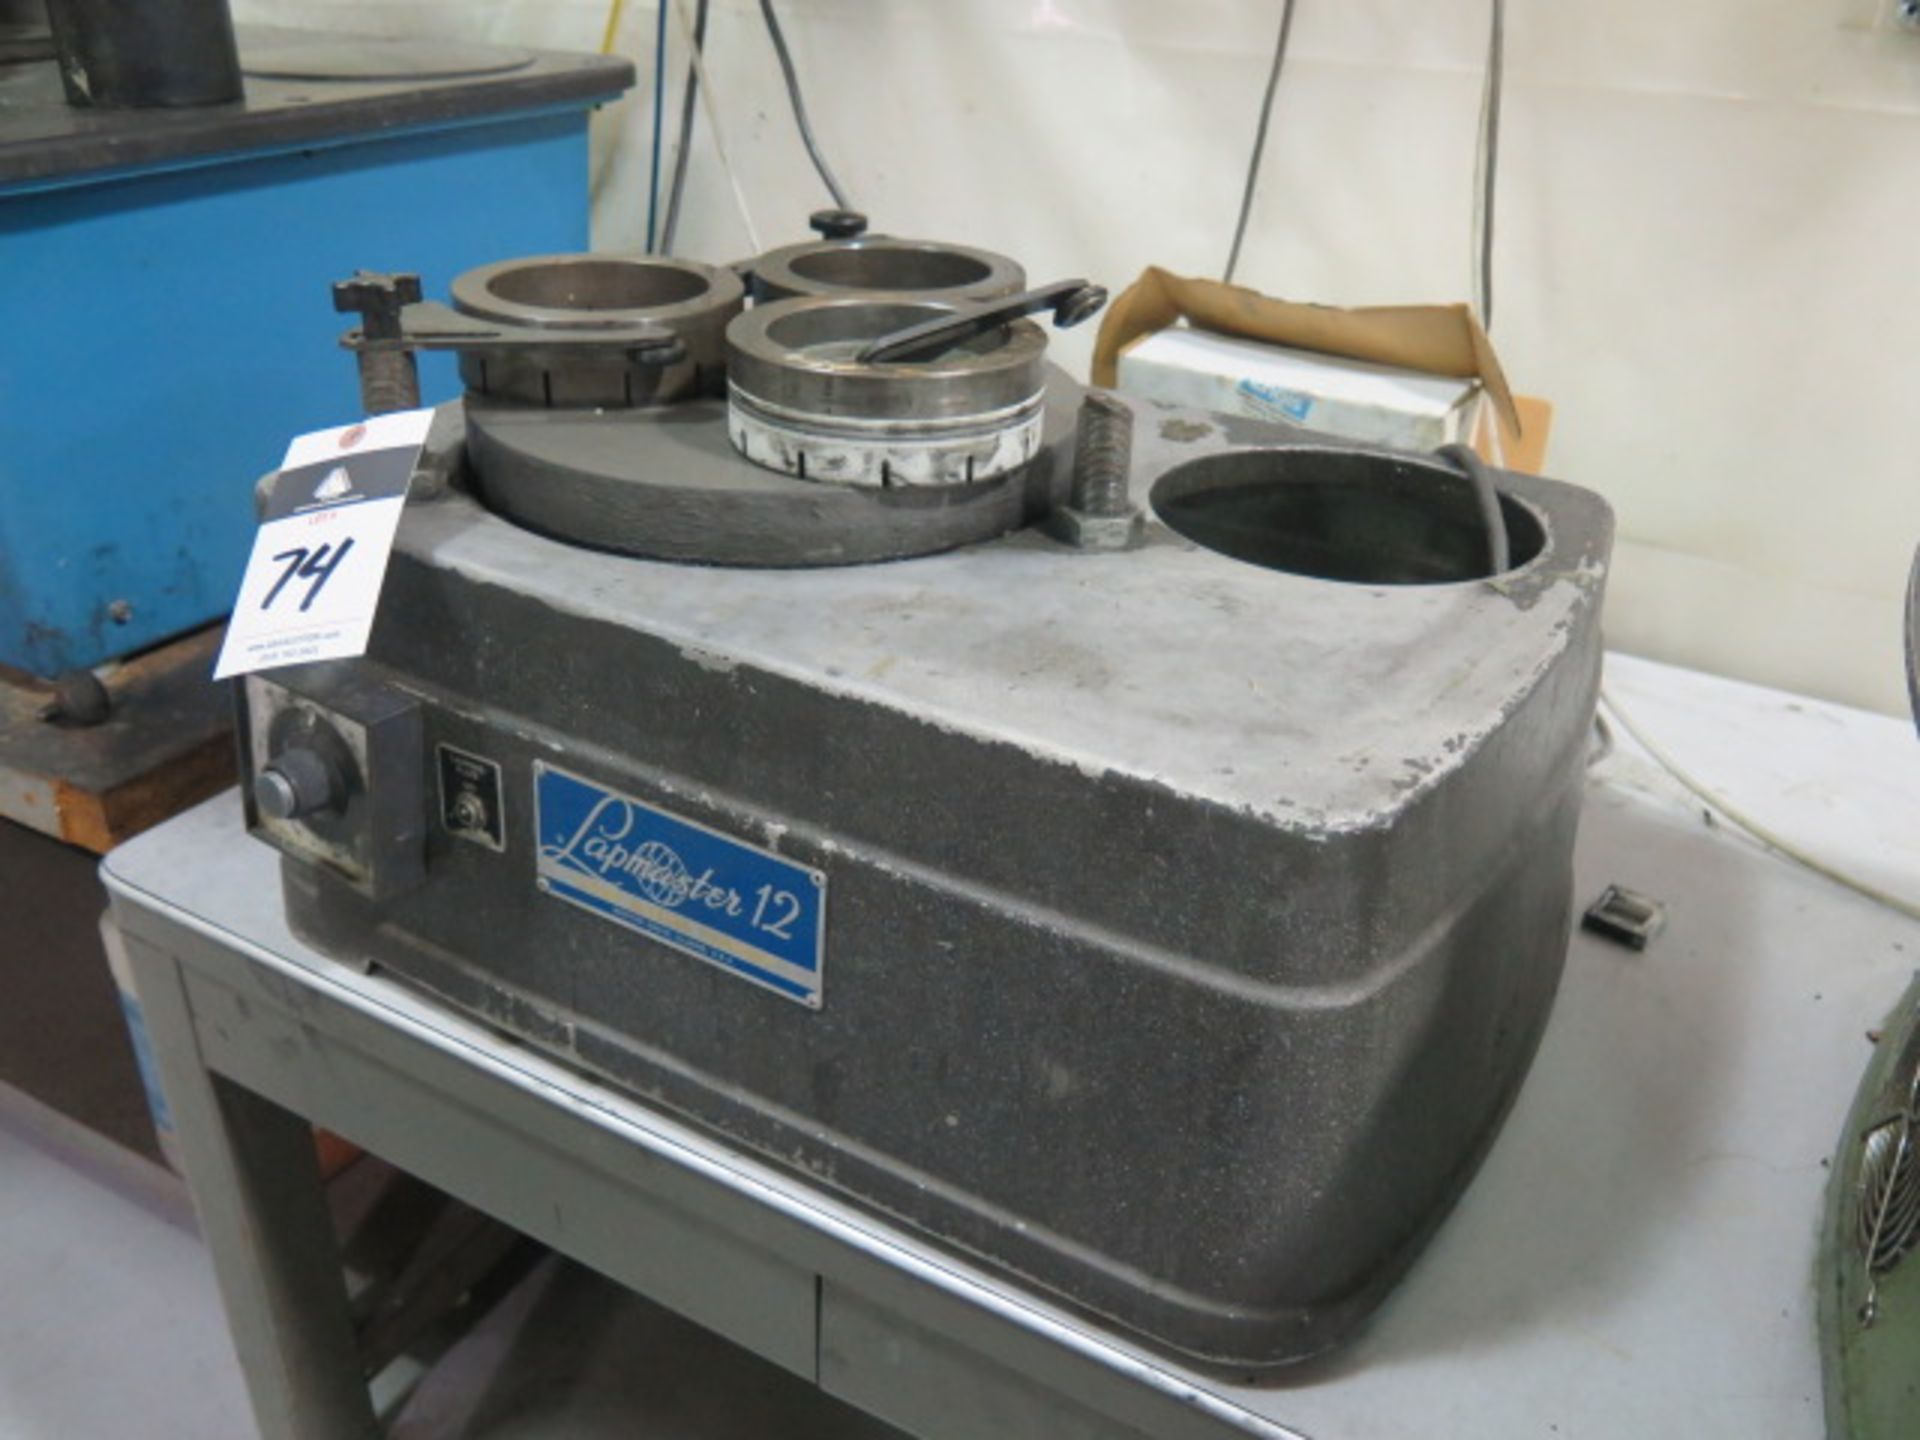 Crane “Lapmaster 12” 12” Lapping Machine - Image 2 of 6